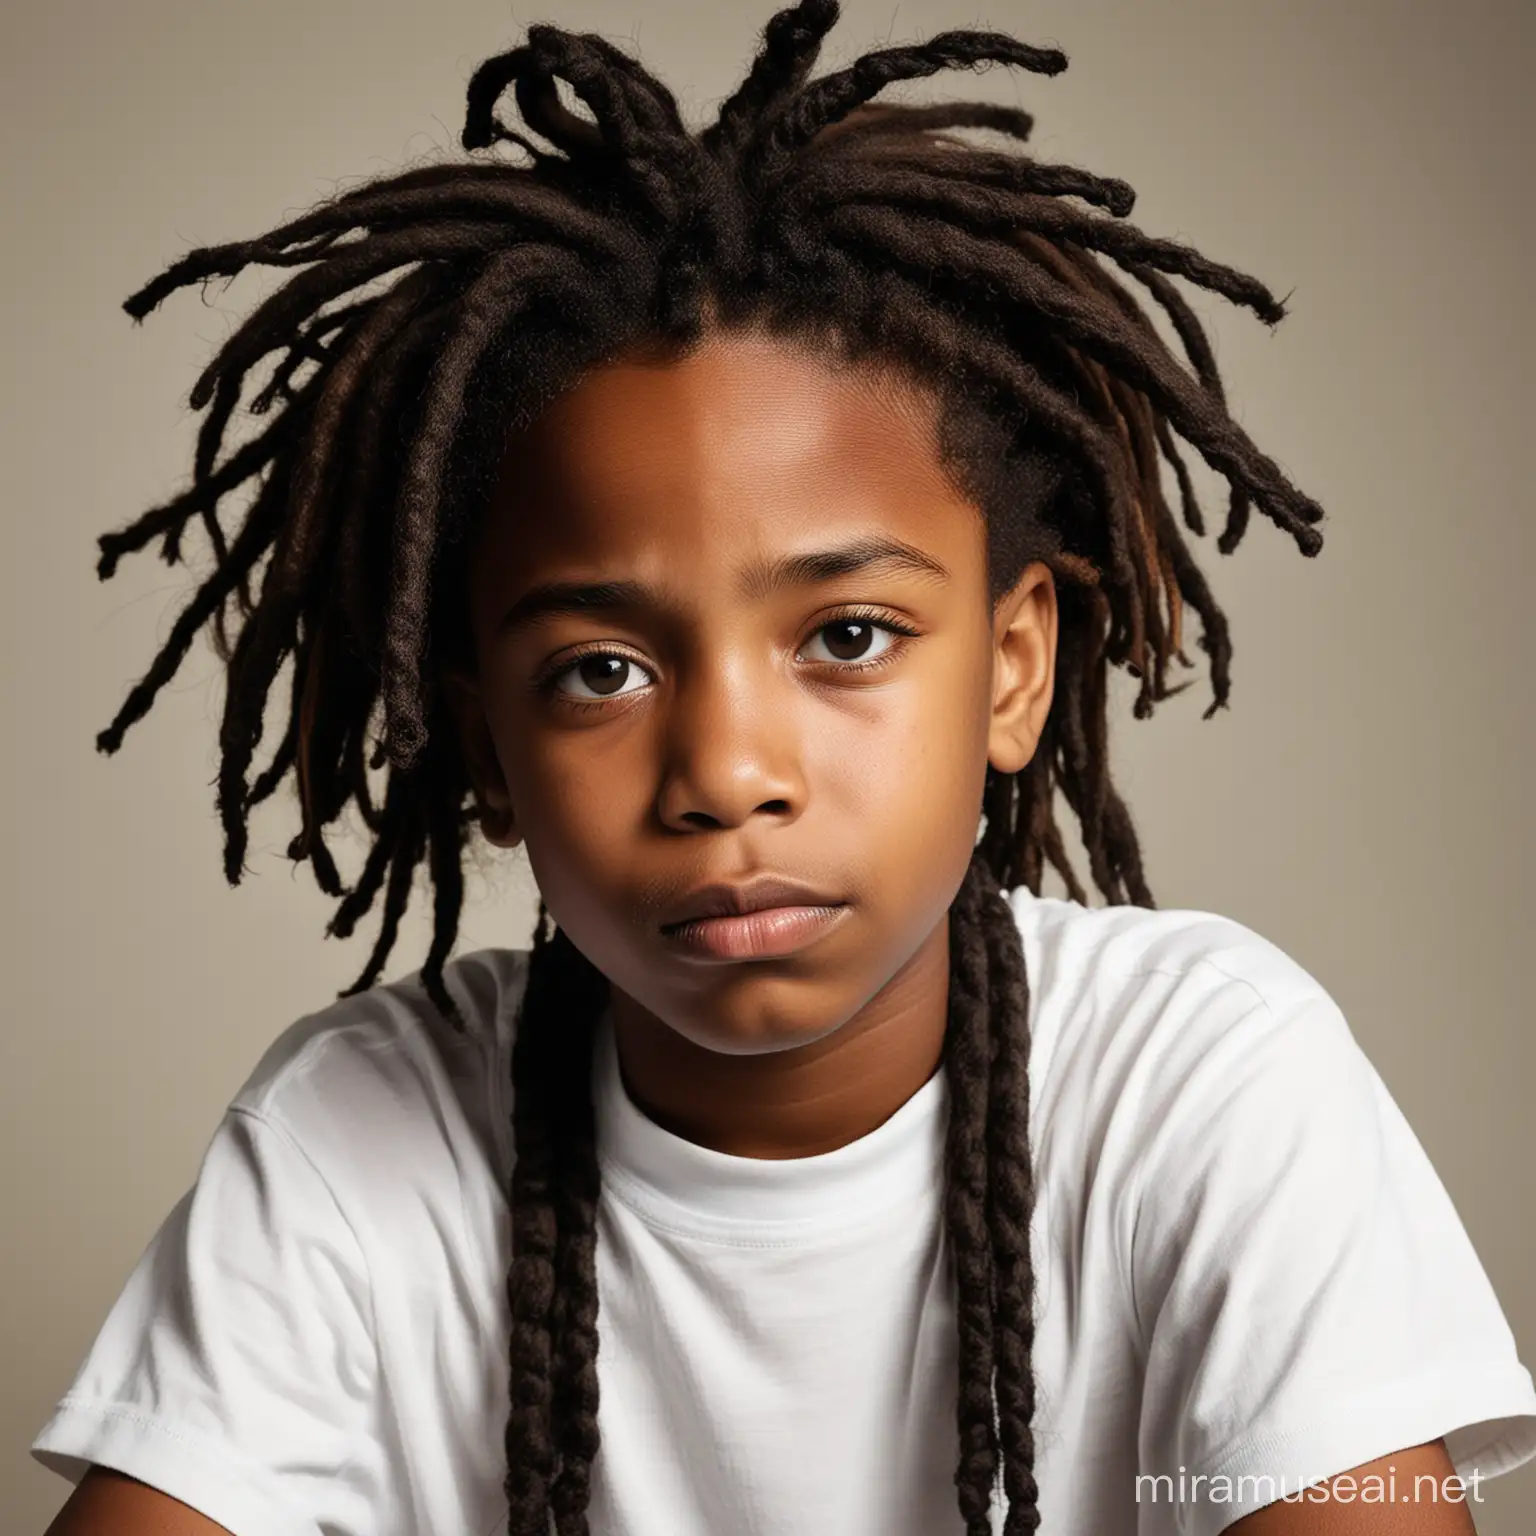 A black kid with dreadlock looking depressed